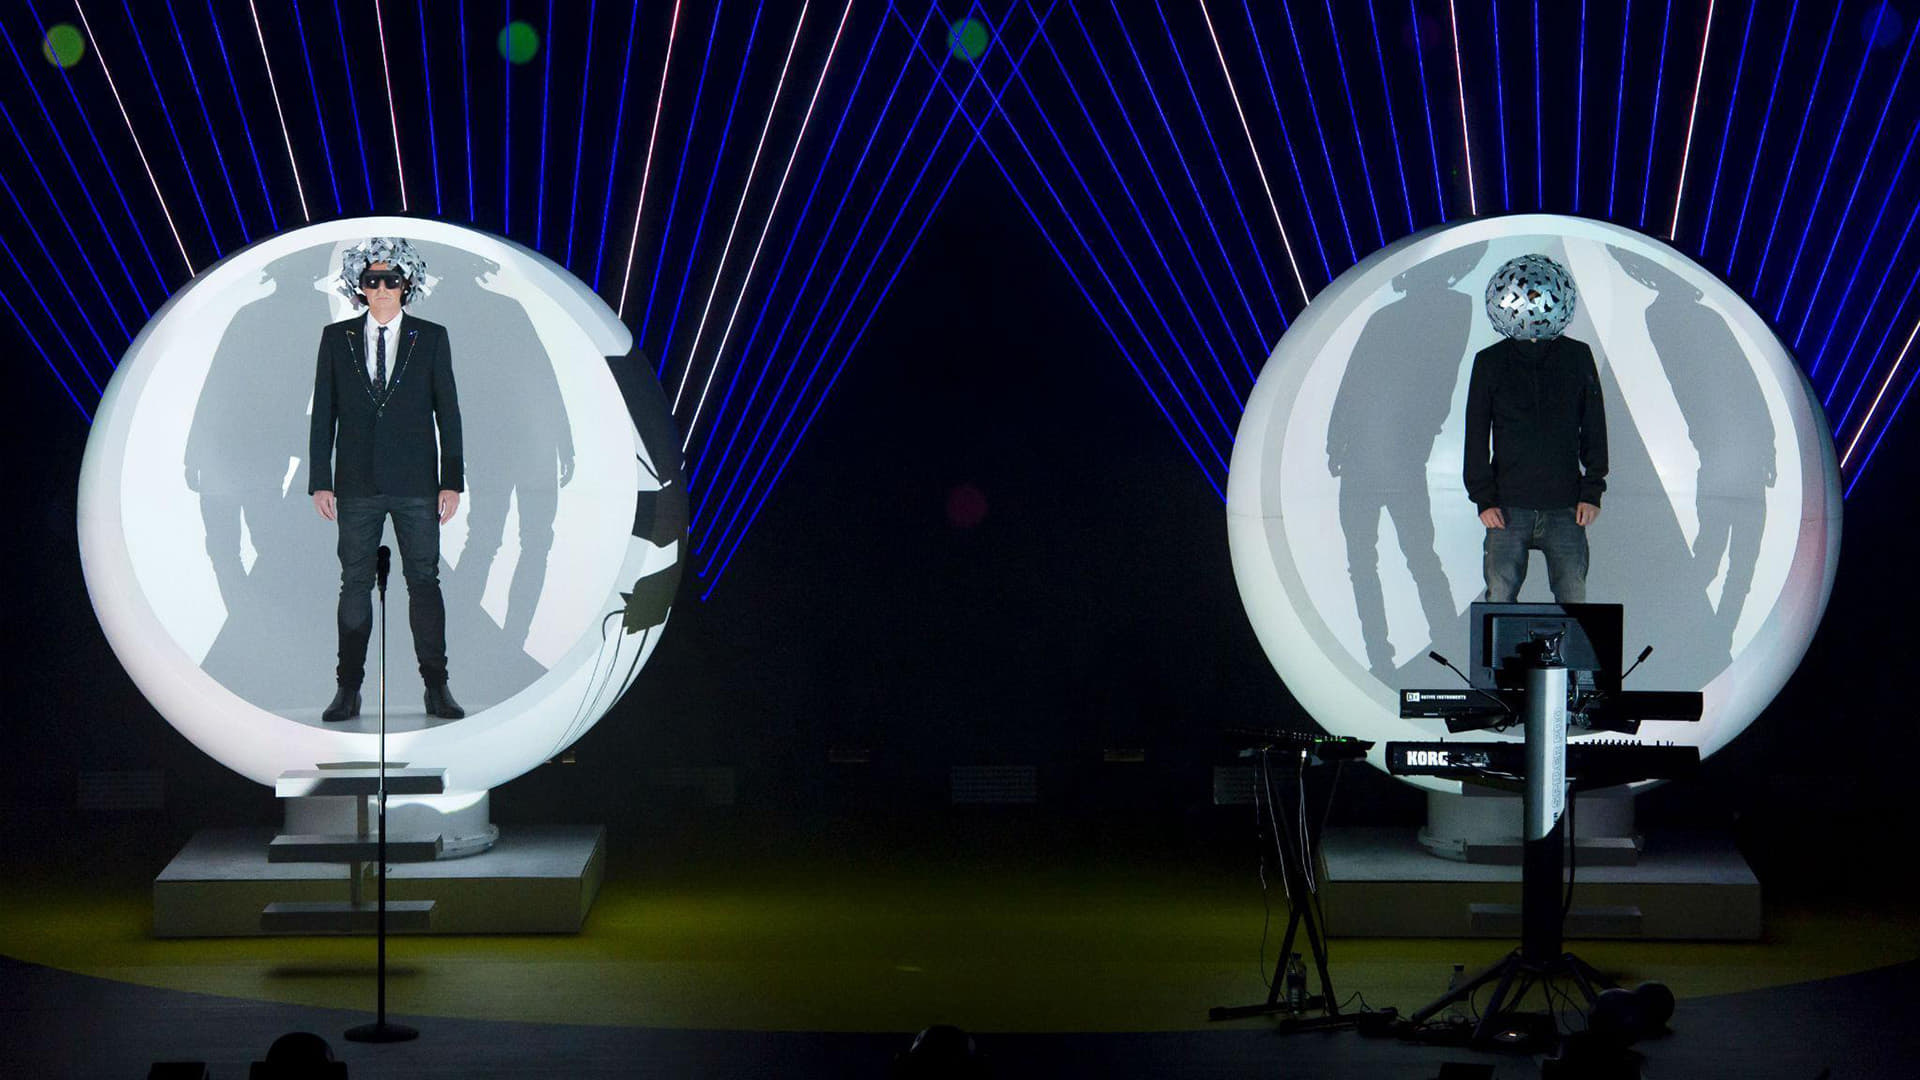 Pet Shop Boys: Inner Sanctum